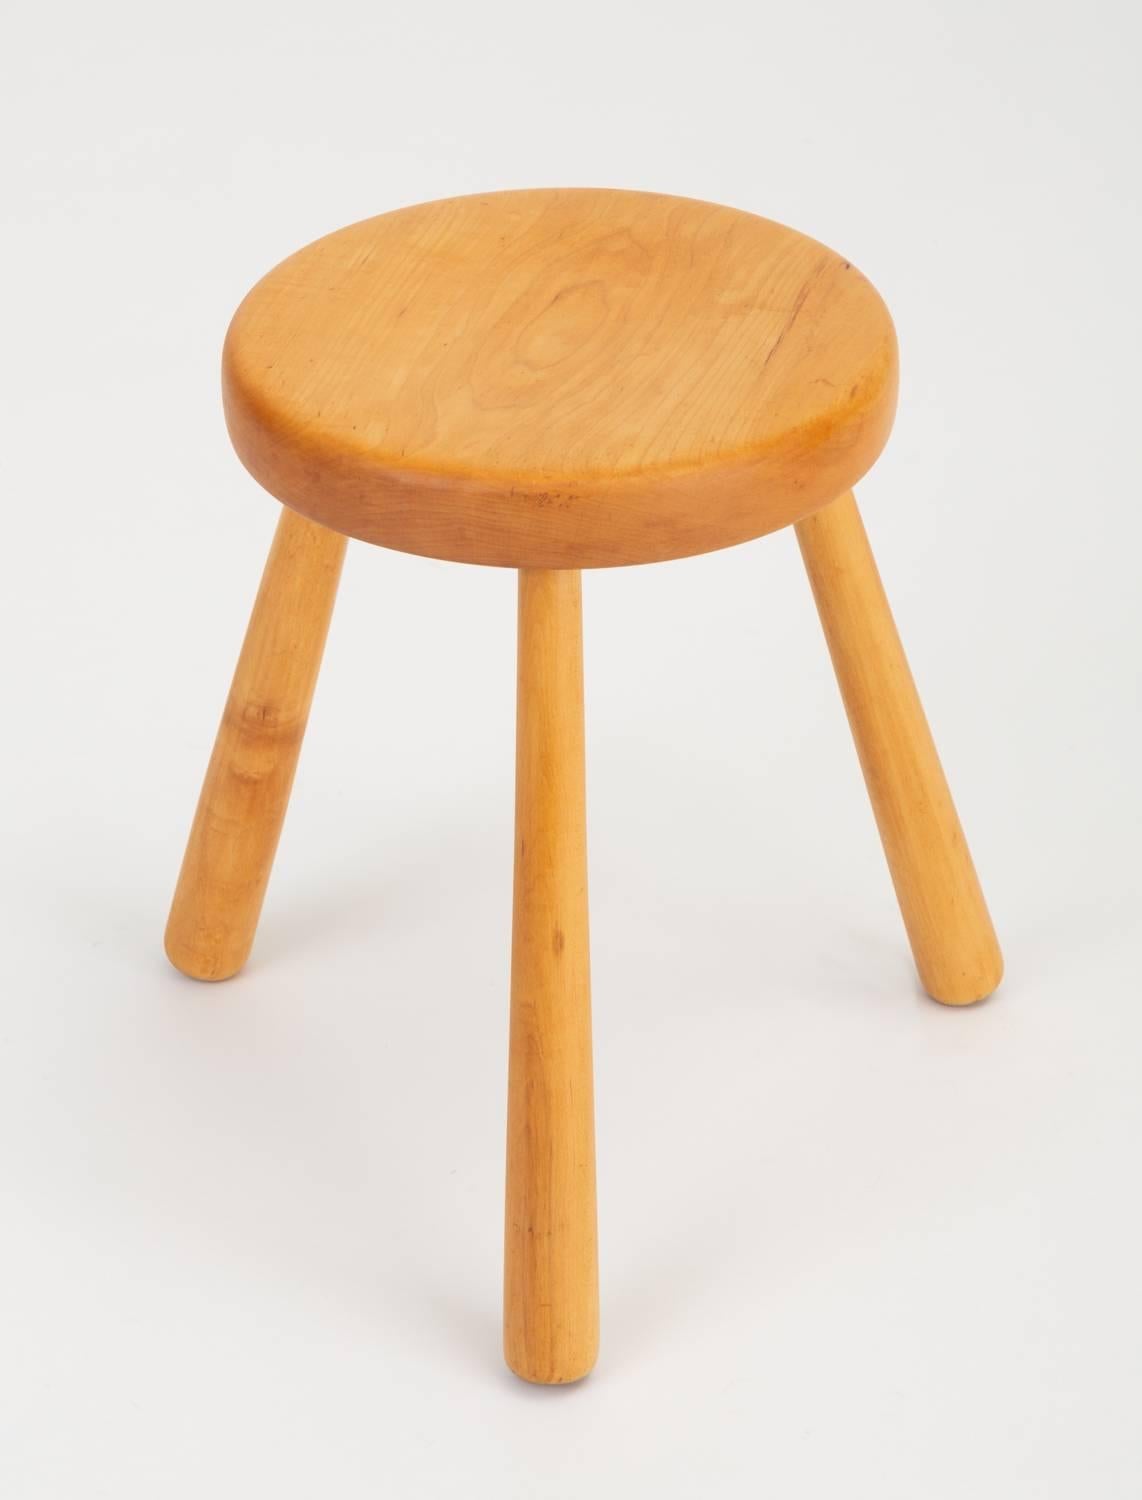 small 3 legged stool